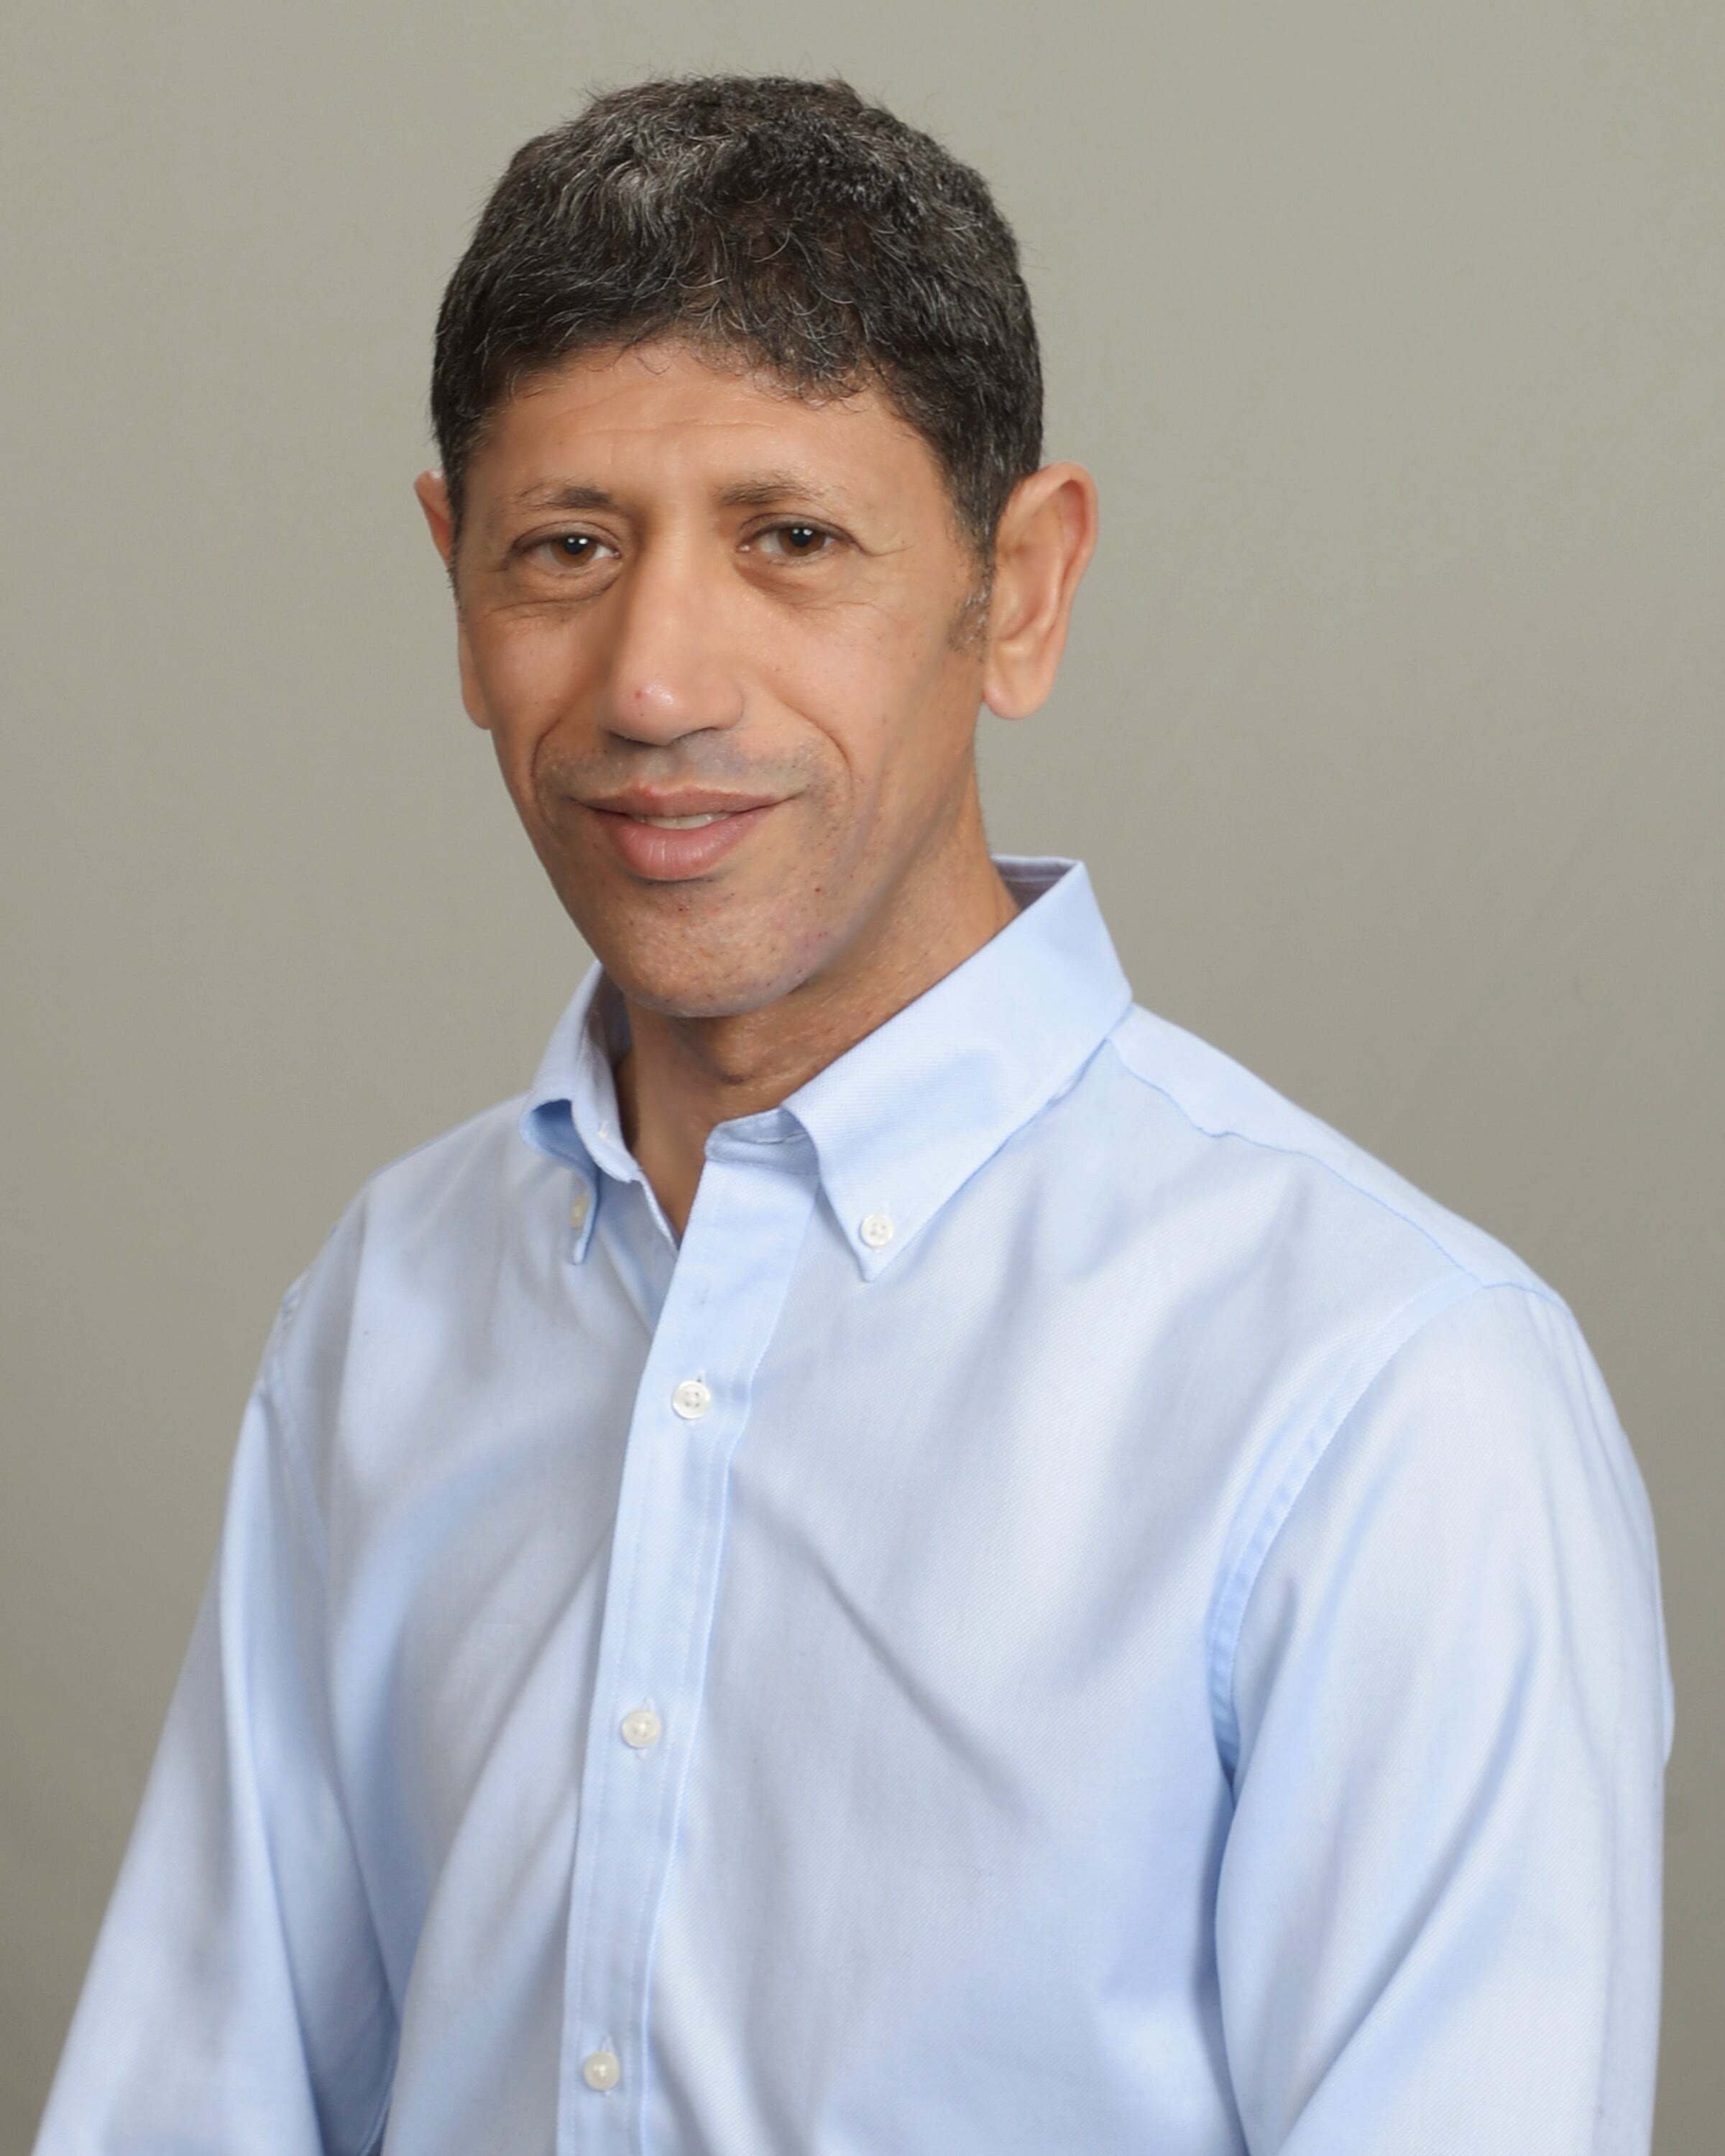 Gilad Maoz, Real Estate Salesperson in Berkeley, Reliance Partners